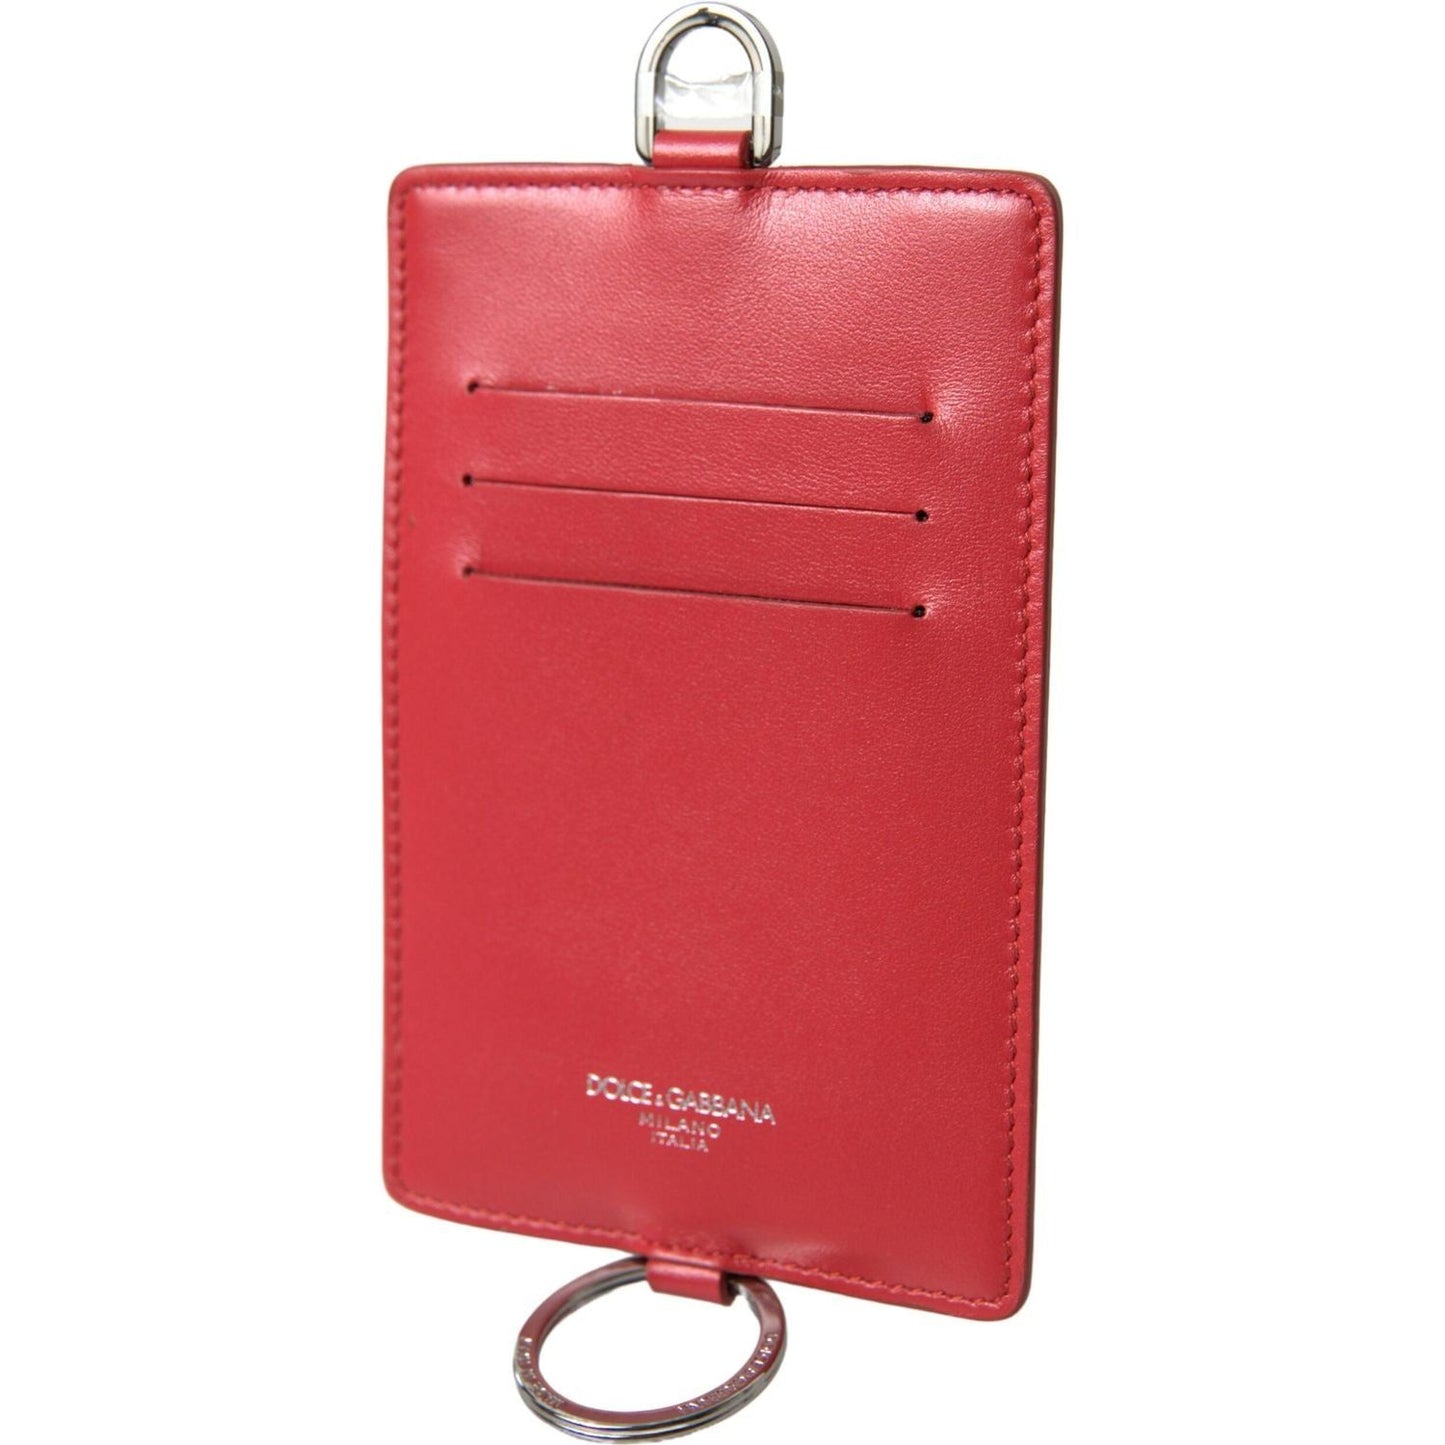 Dolce & Gabbana Elegant Red Leather Lanyard Card Holder red-leather-lanyard-logo-card-holder-men-wallet 465A4551-scaled-722c0859-f7d.jpg